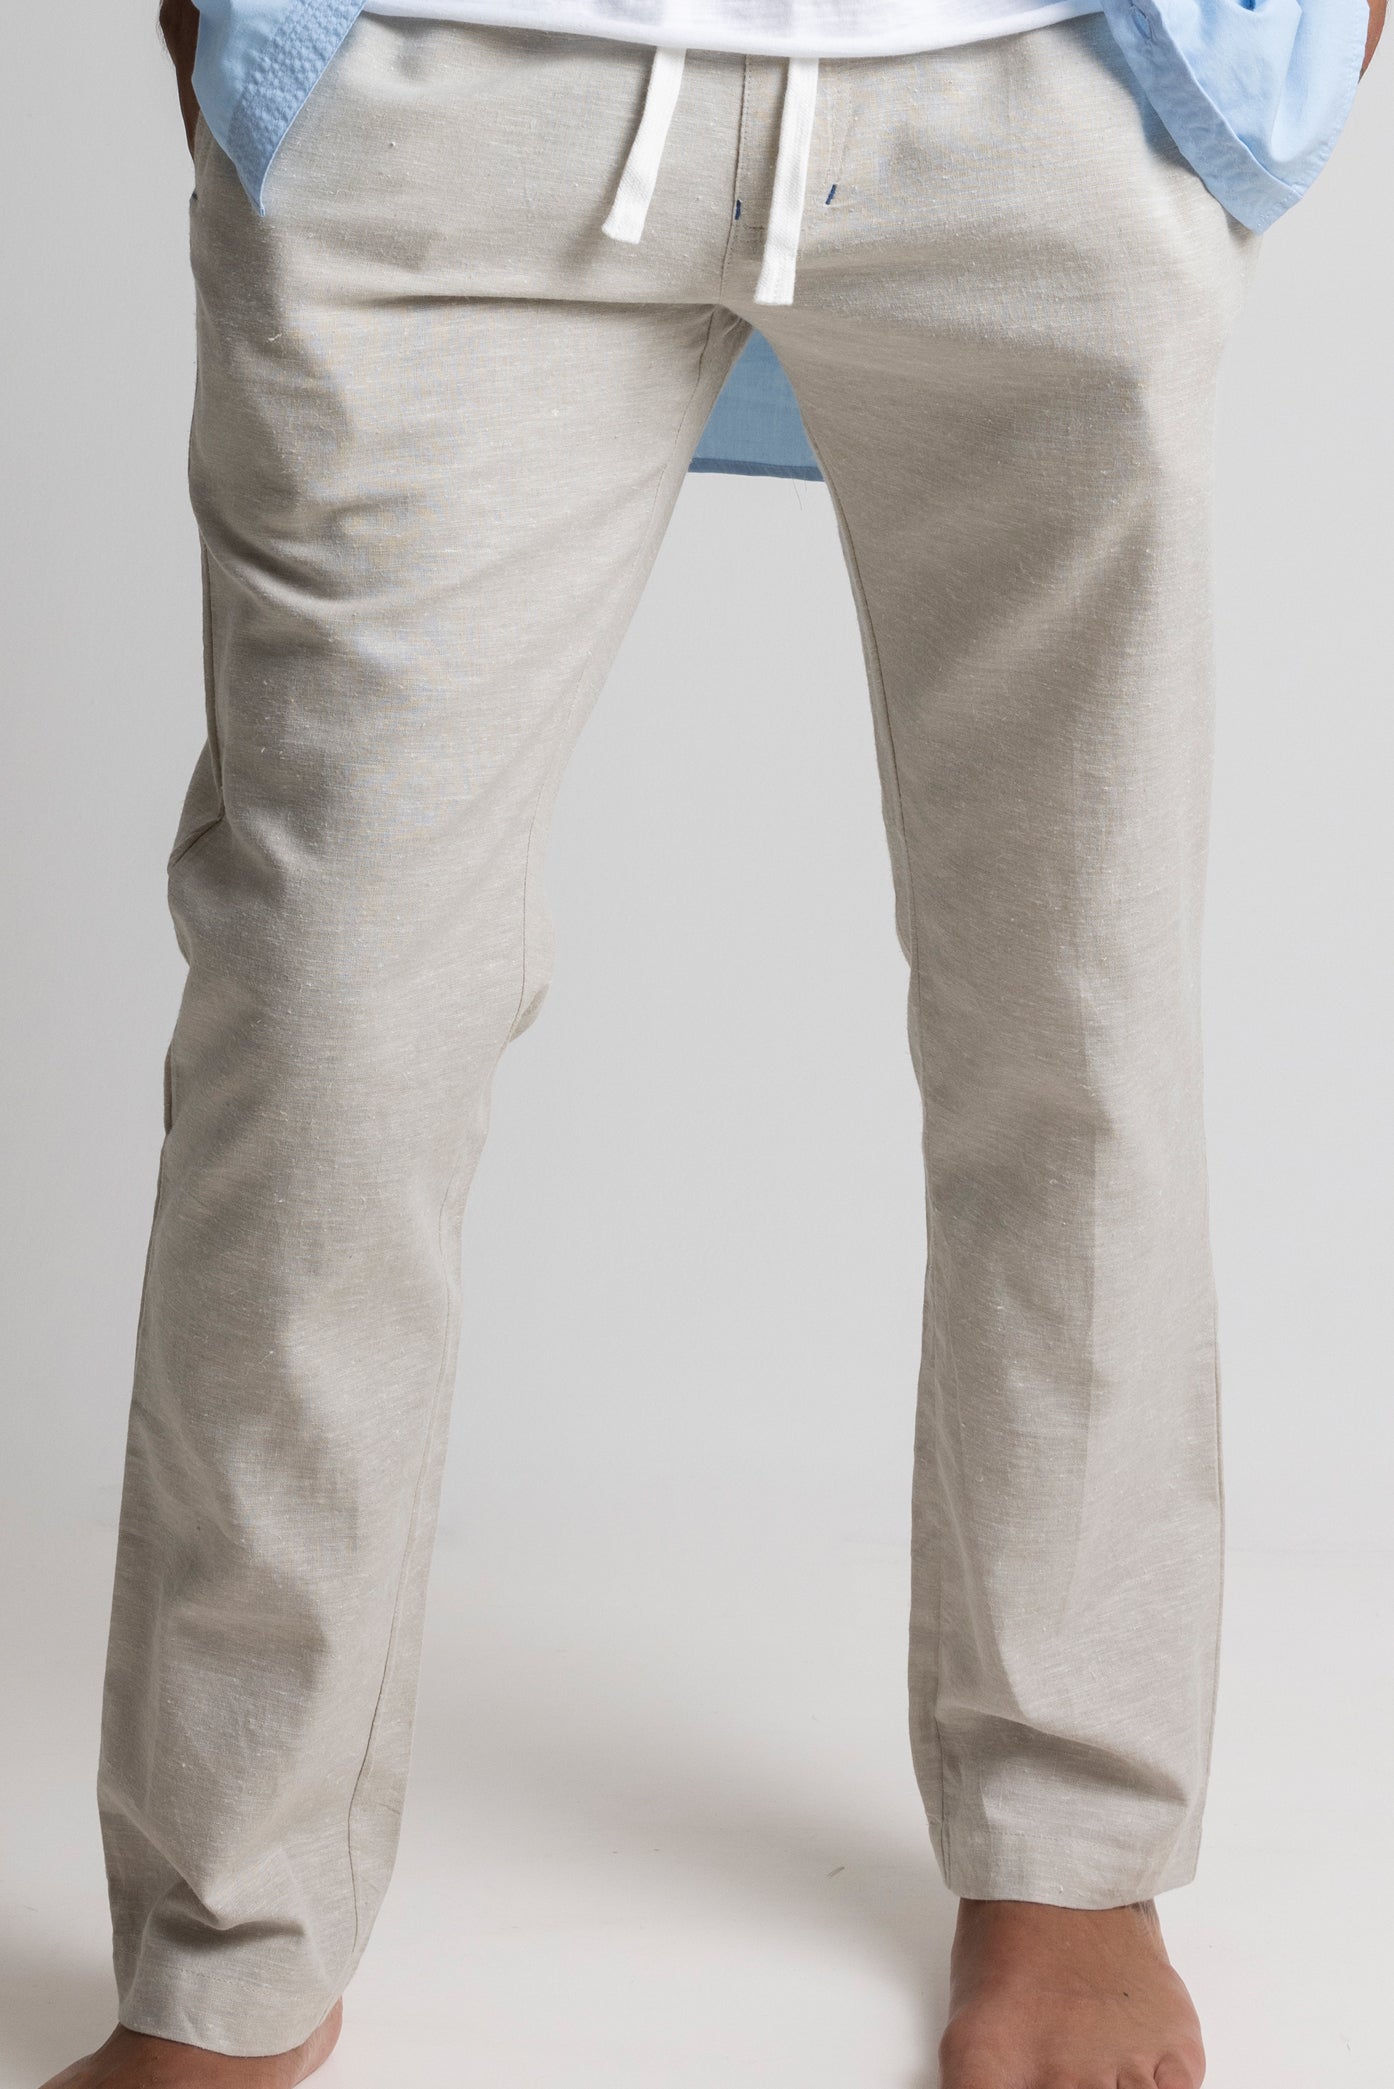 COOFANDY Men's Casual Linen Pants Elastic Waist Drawstring Cotton Trousers  | eBay